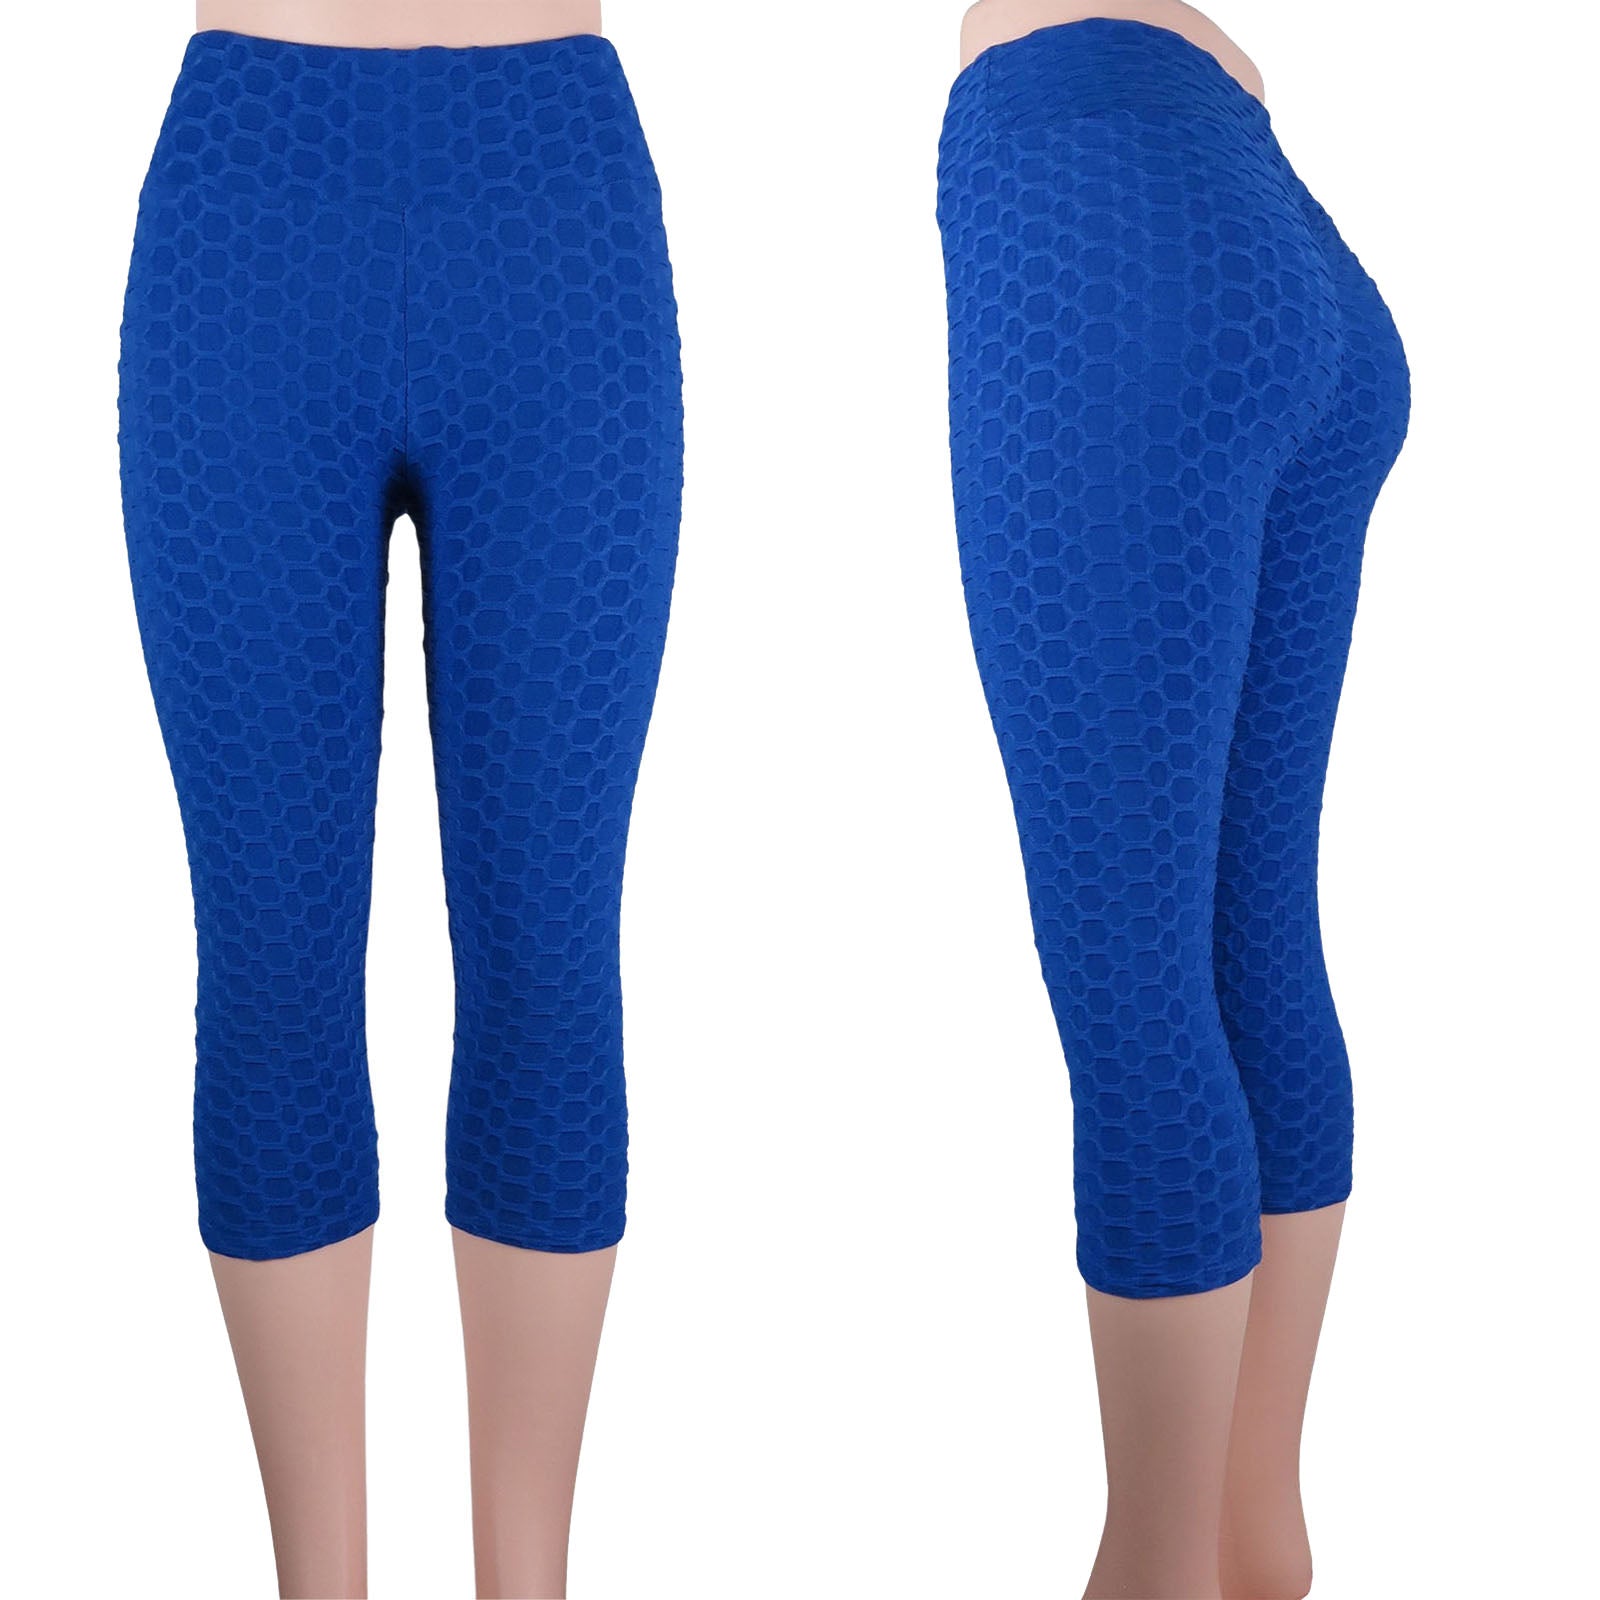 Blue Yoga Shorts Women Short Yoga Pants S XL Solid High Waist